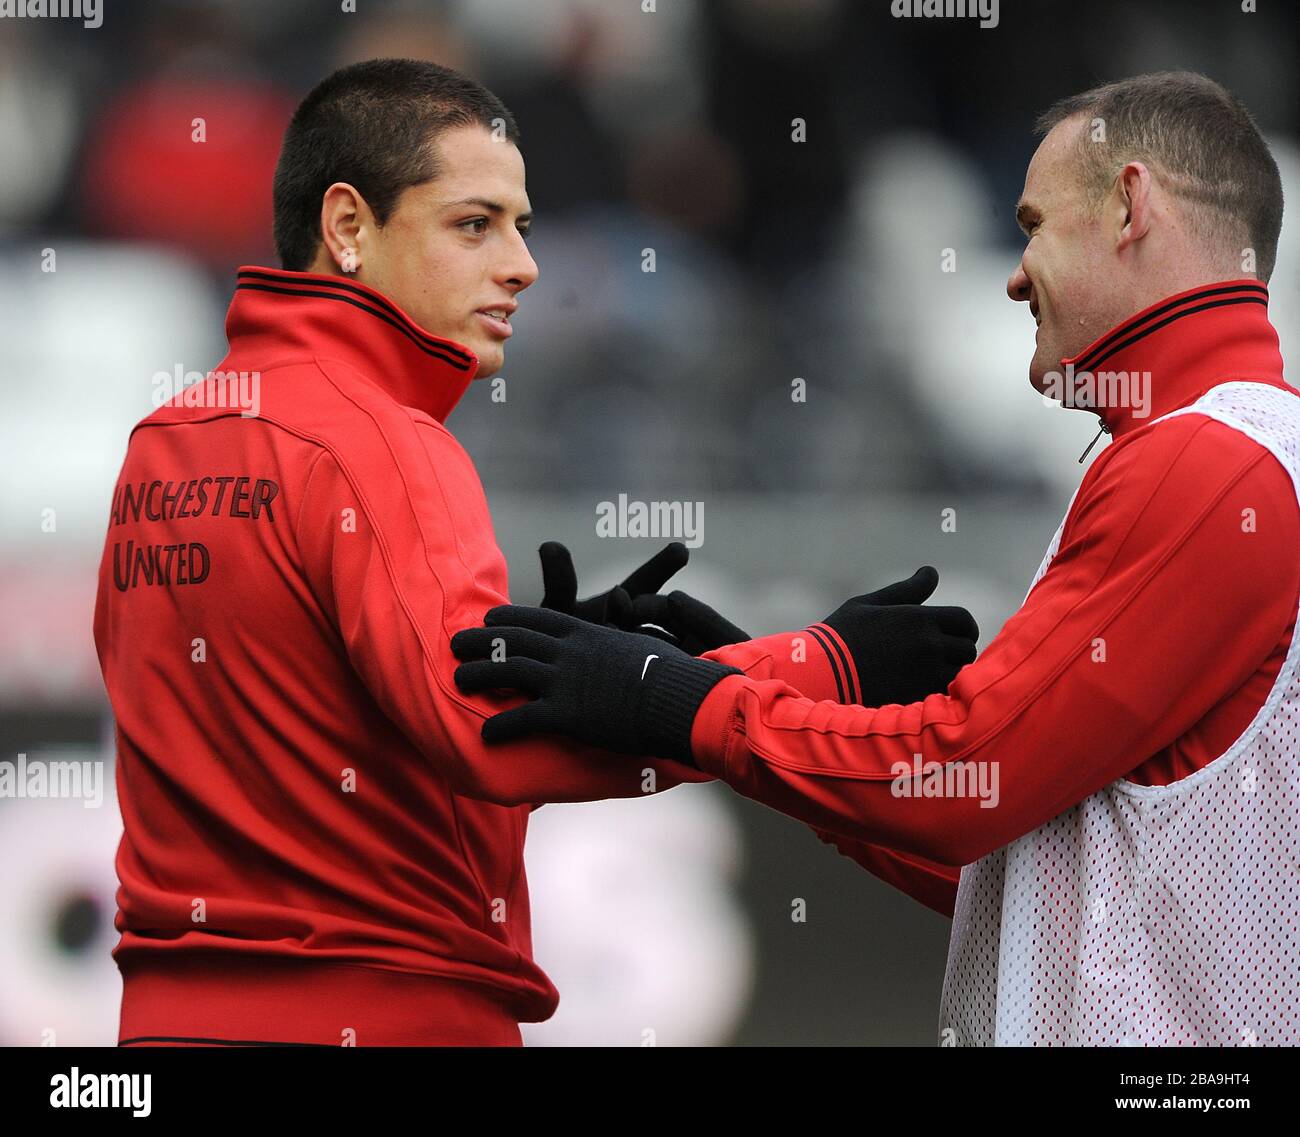 Manchester United's Javier Hernandez (left) speaks with teammate Wayne Rooney (right) Stock Photo